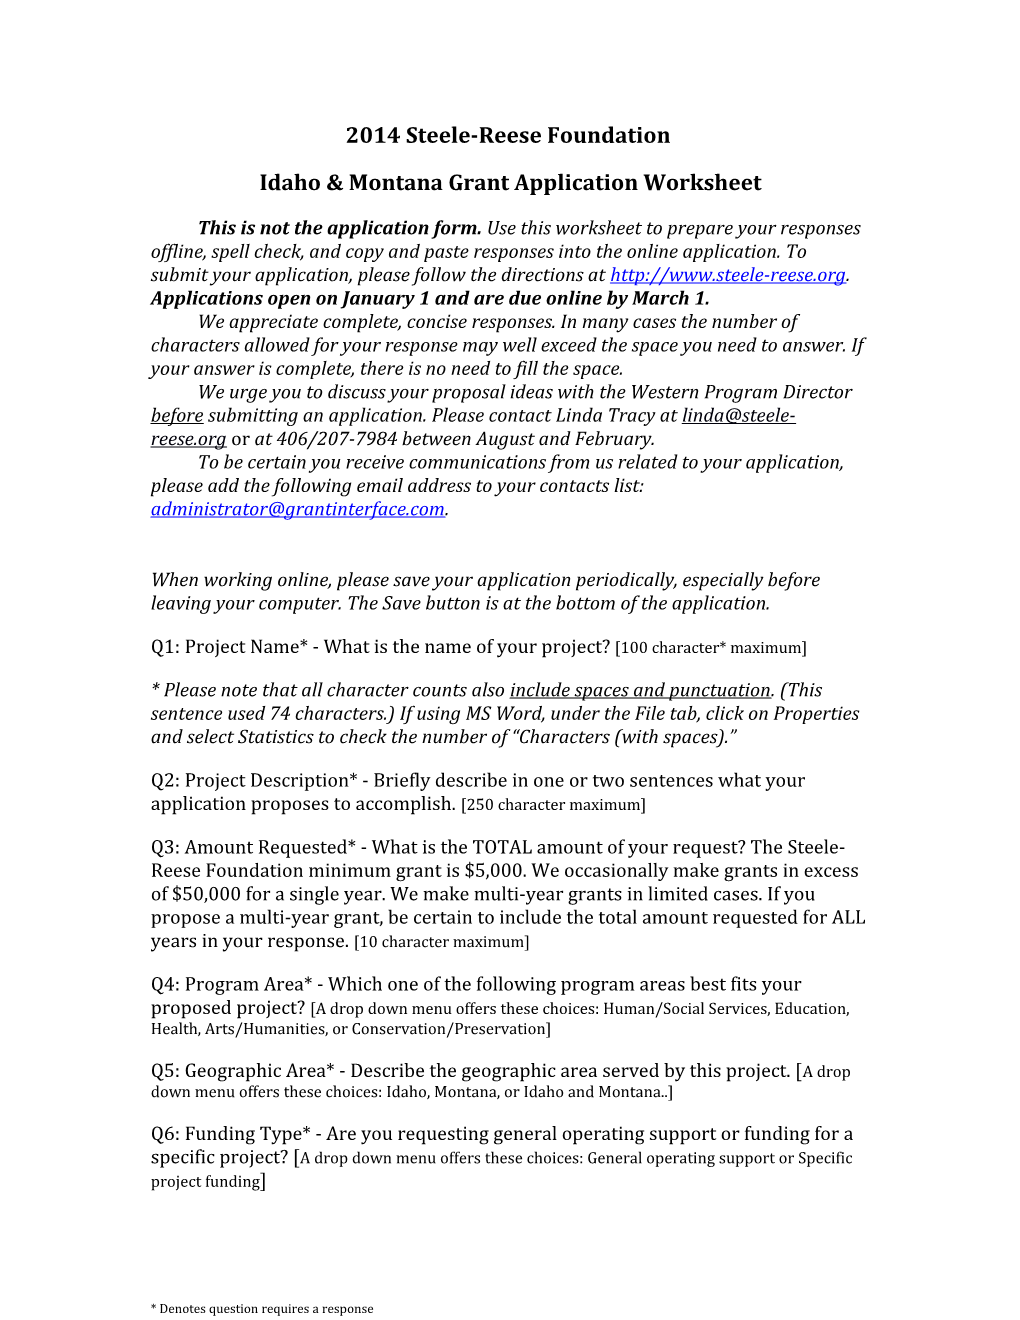 2011 Steele-Reese Foundation Grant Application Worksheet 1